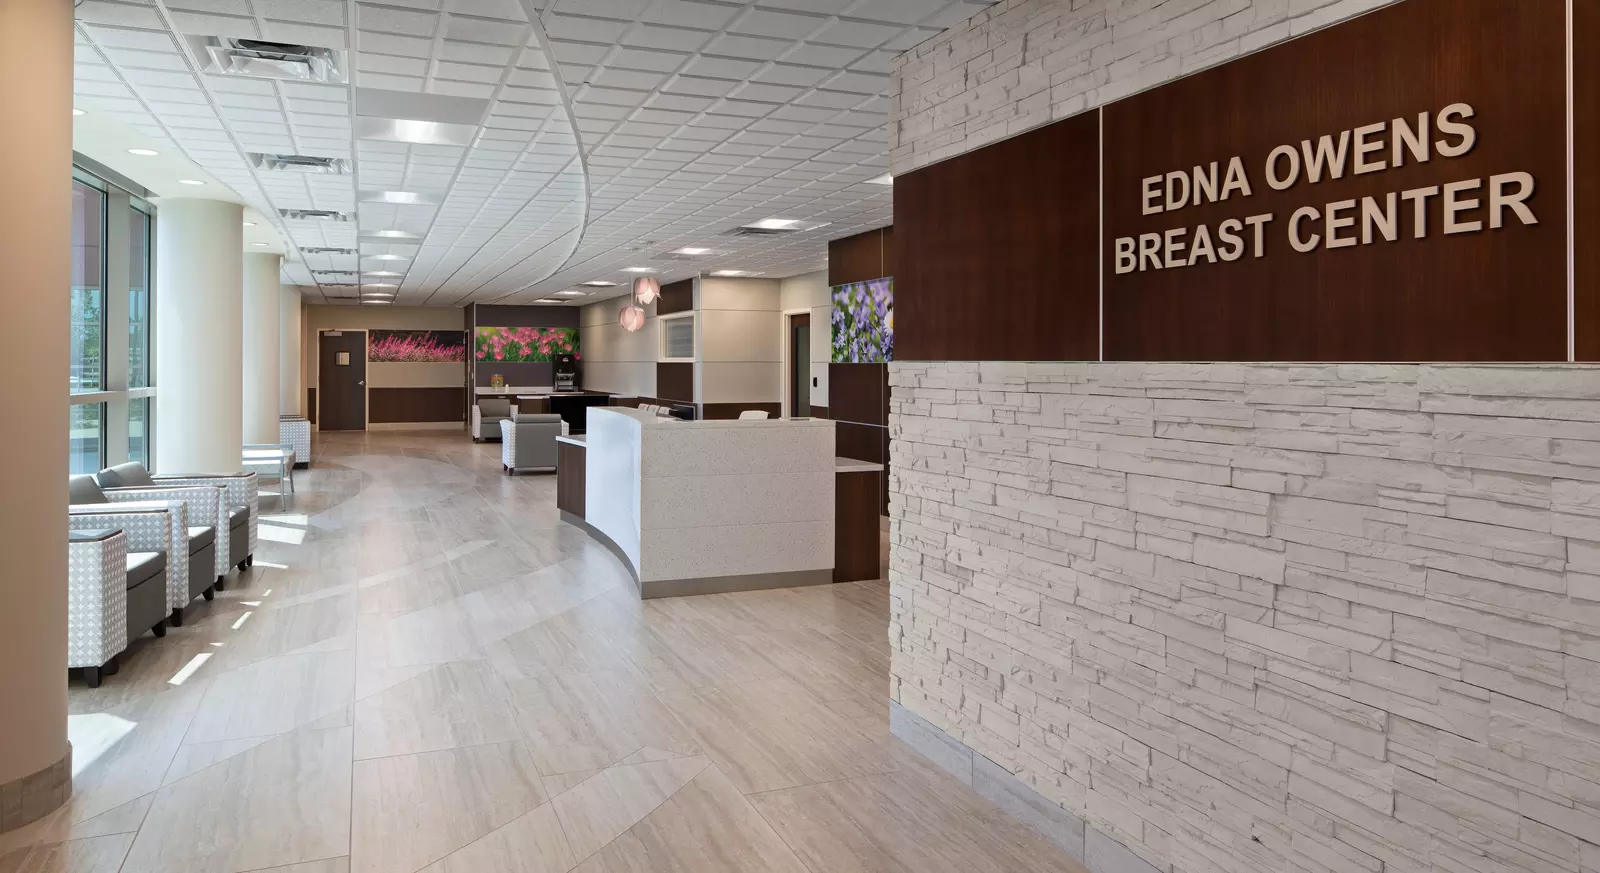 Edna Owens Breast Center